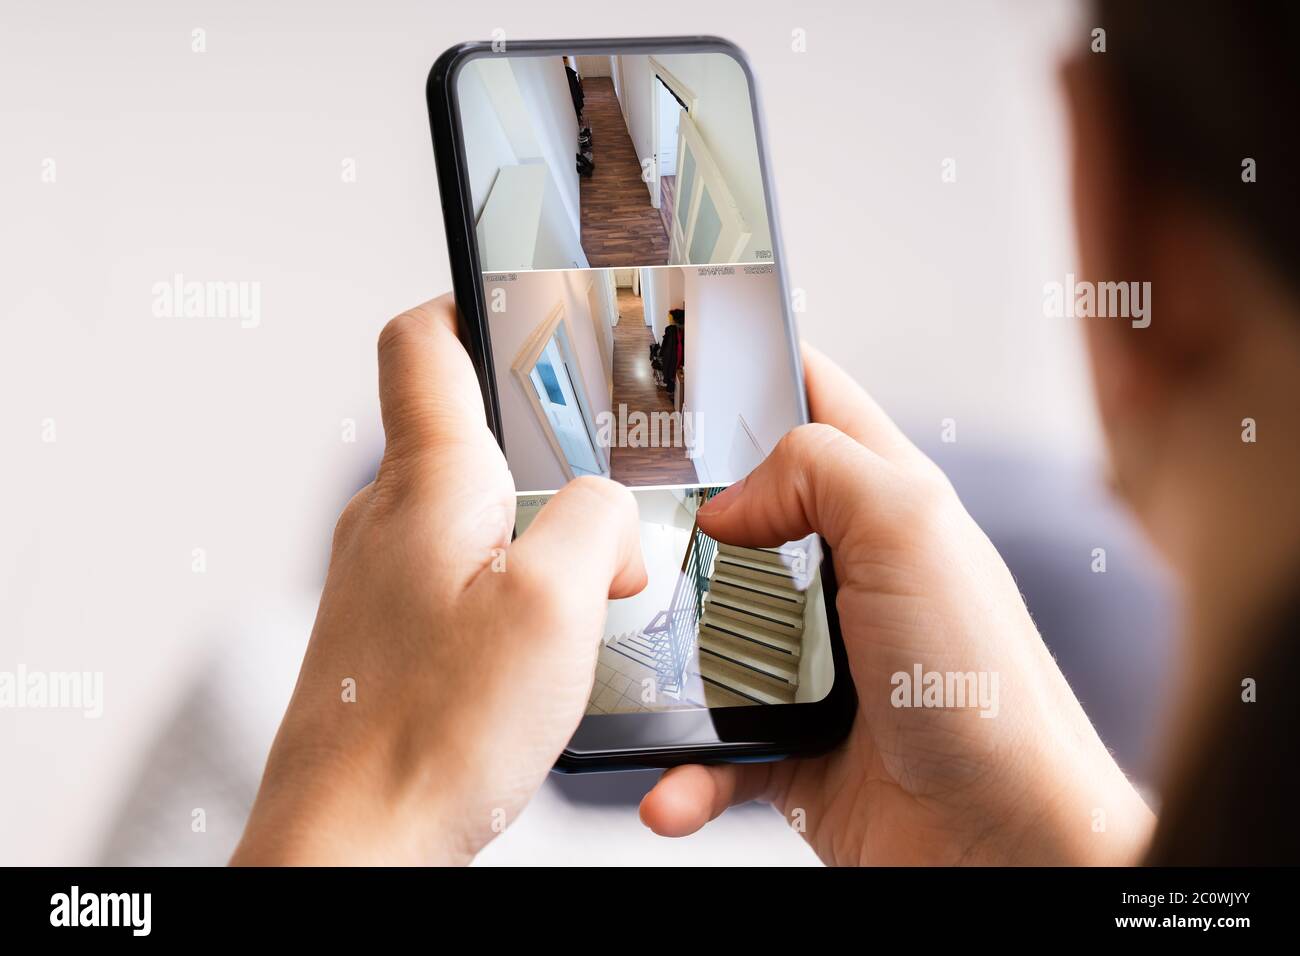 Security Camera Surveillance Video On Phone Screen Stock Photo - Alamy